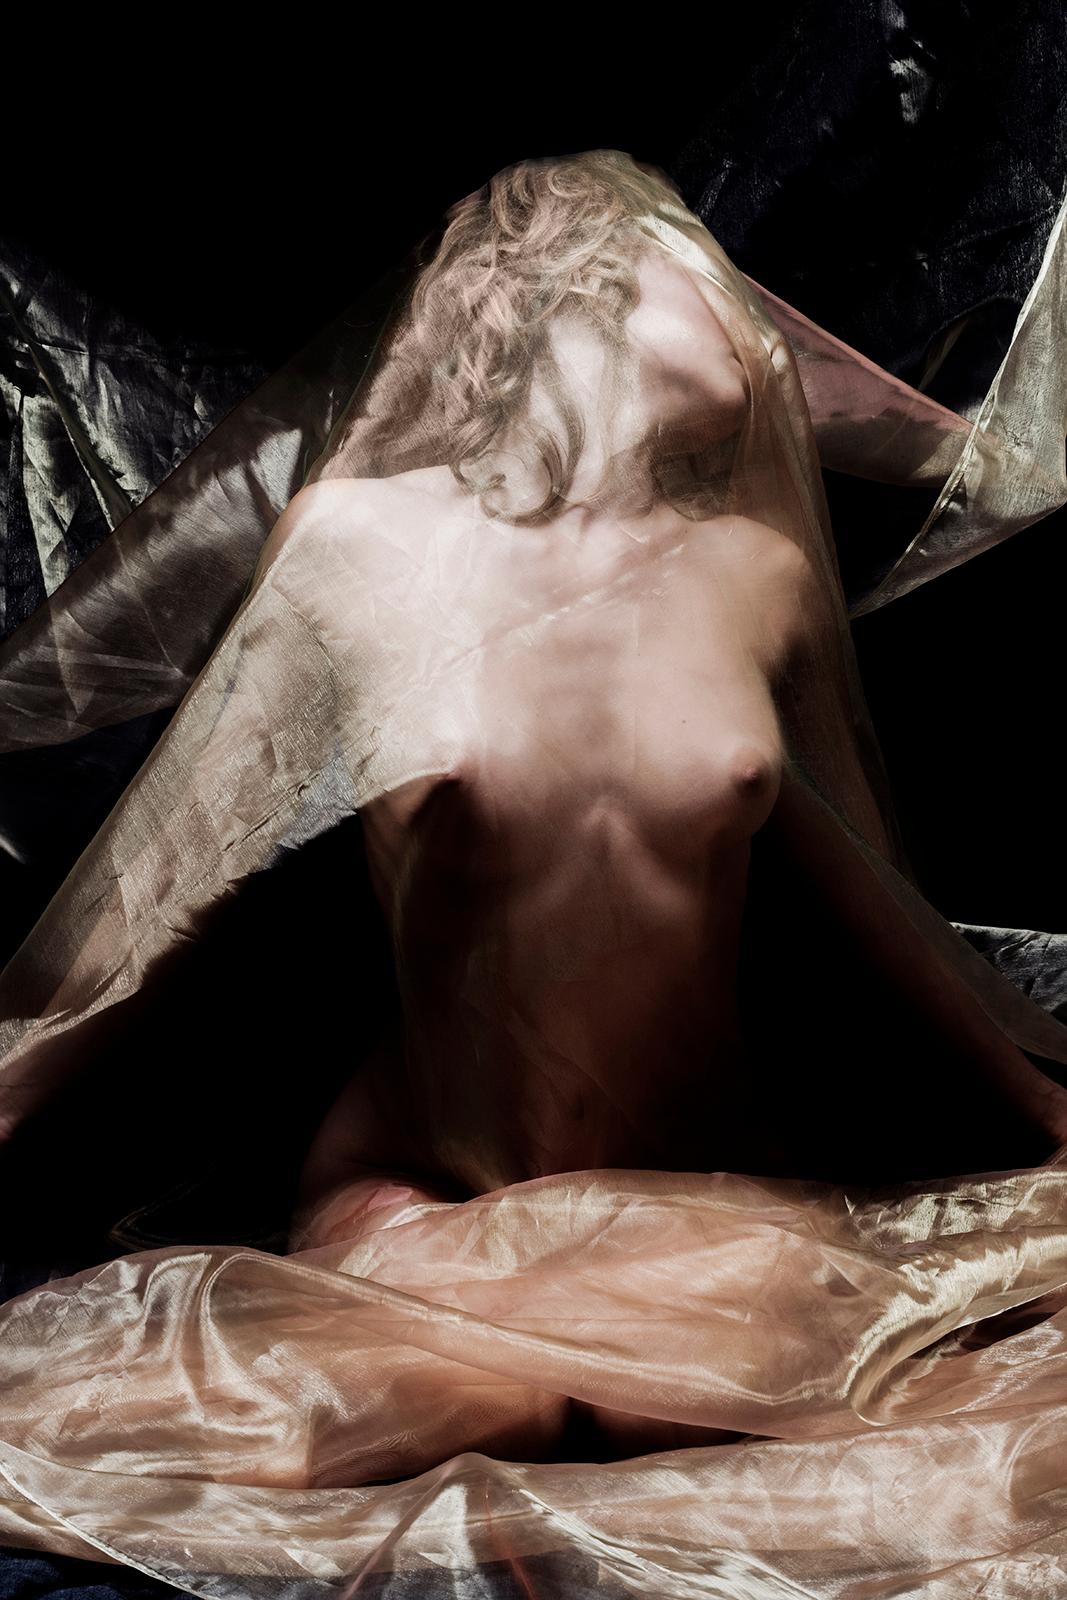 Ian Sanderson Nude Photograph - Organza dream  Signed limited edition nude art print, Contemporary, Sensual Model